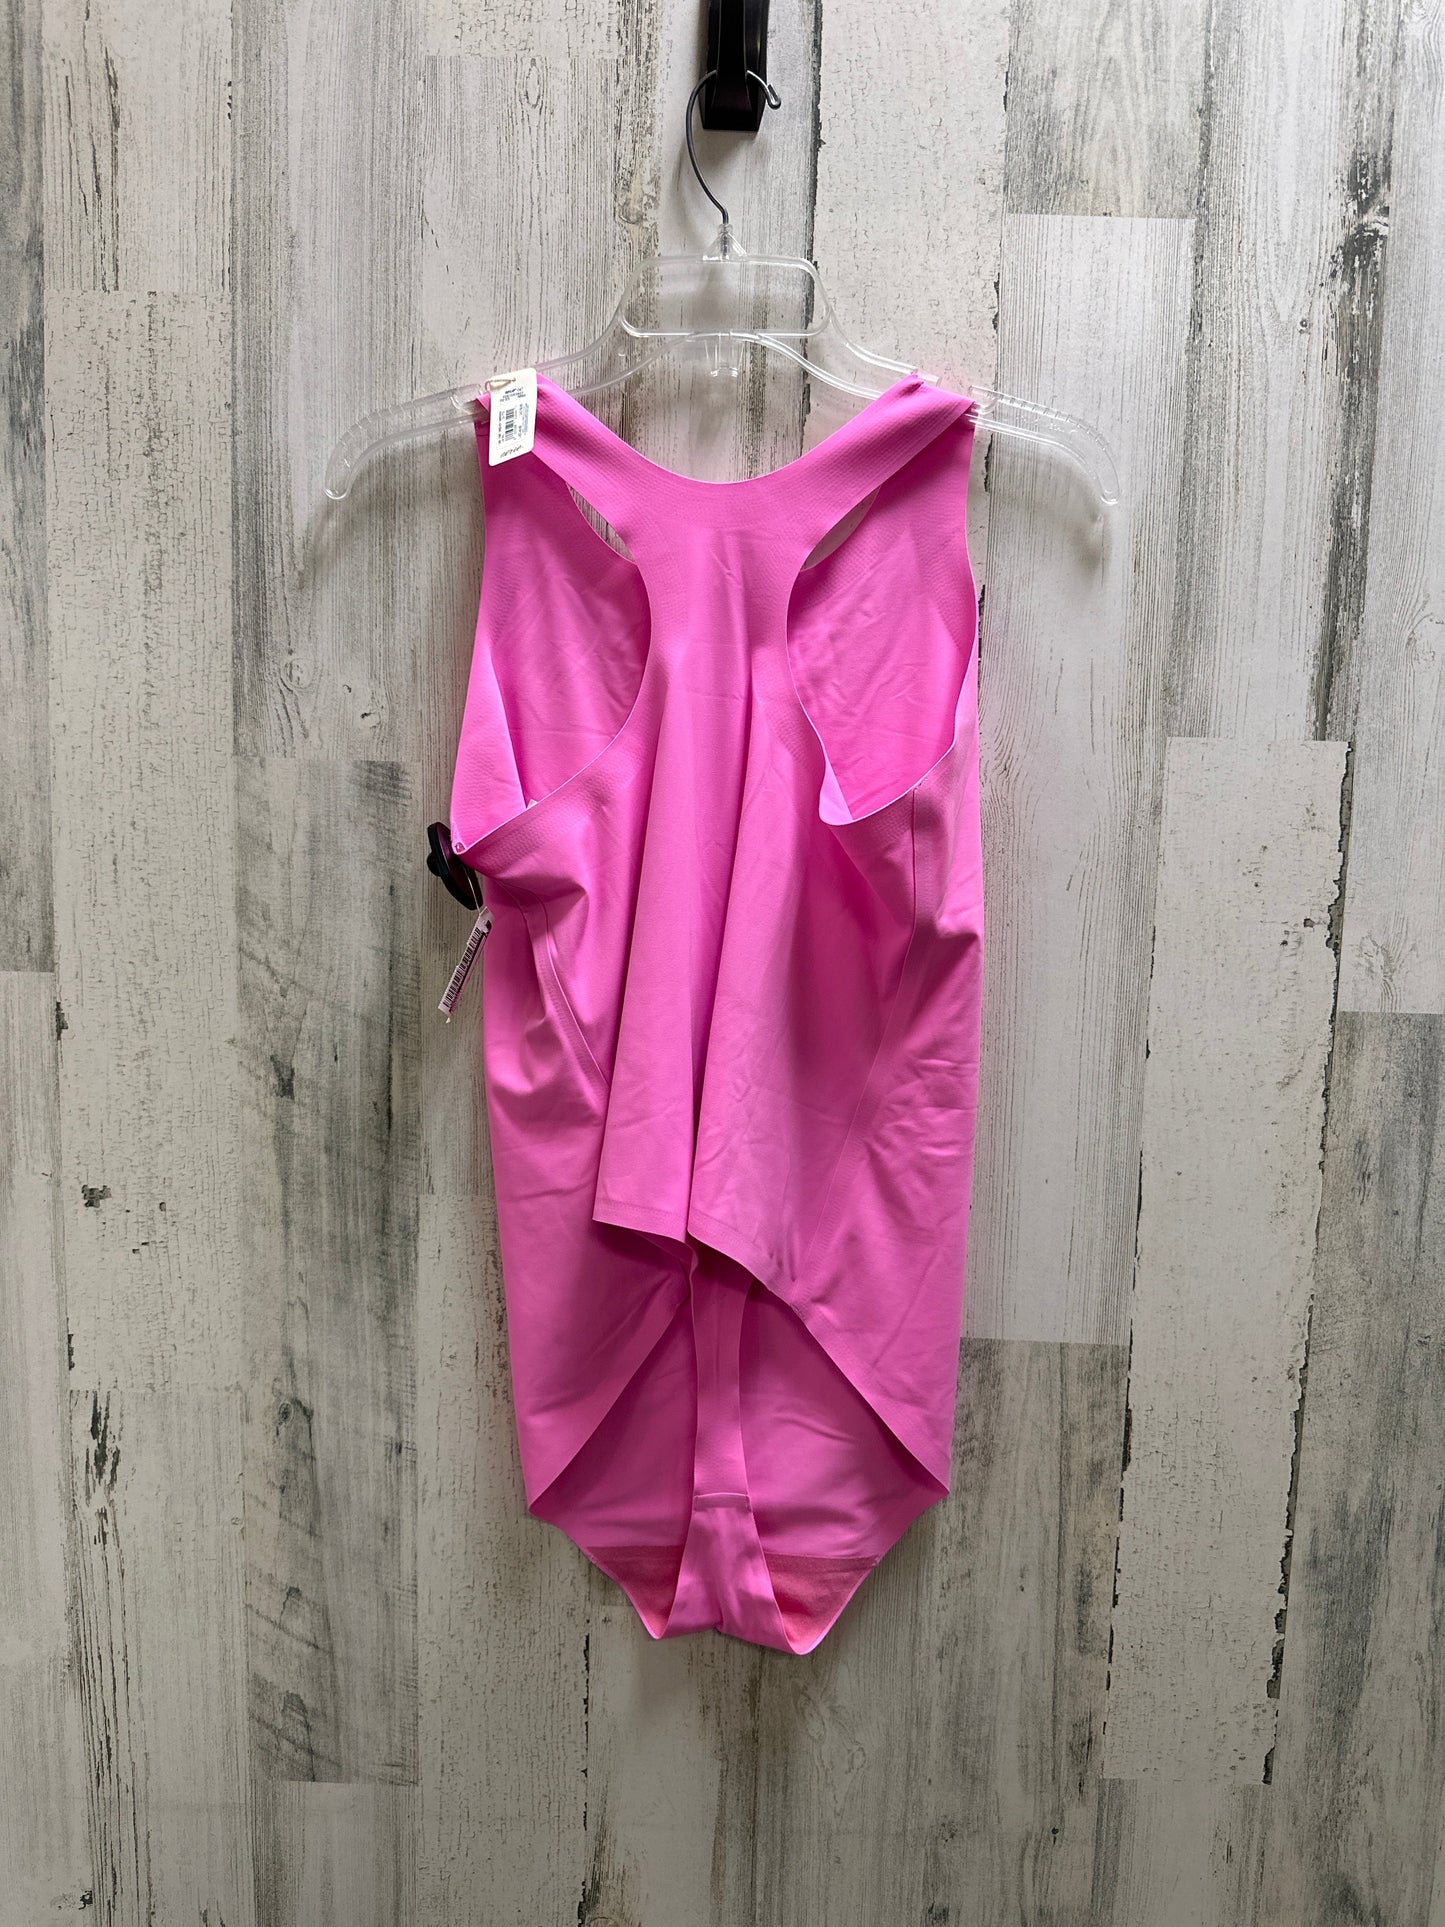 Pink Bodysuit Aerie, Size Xxl